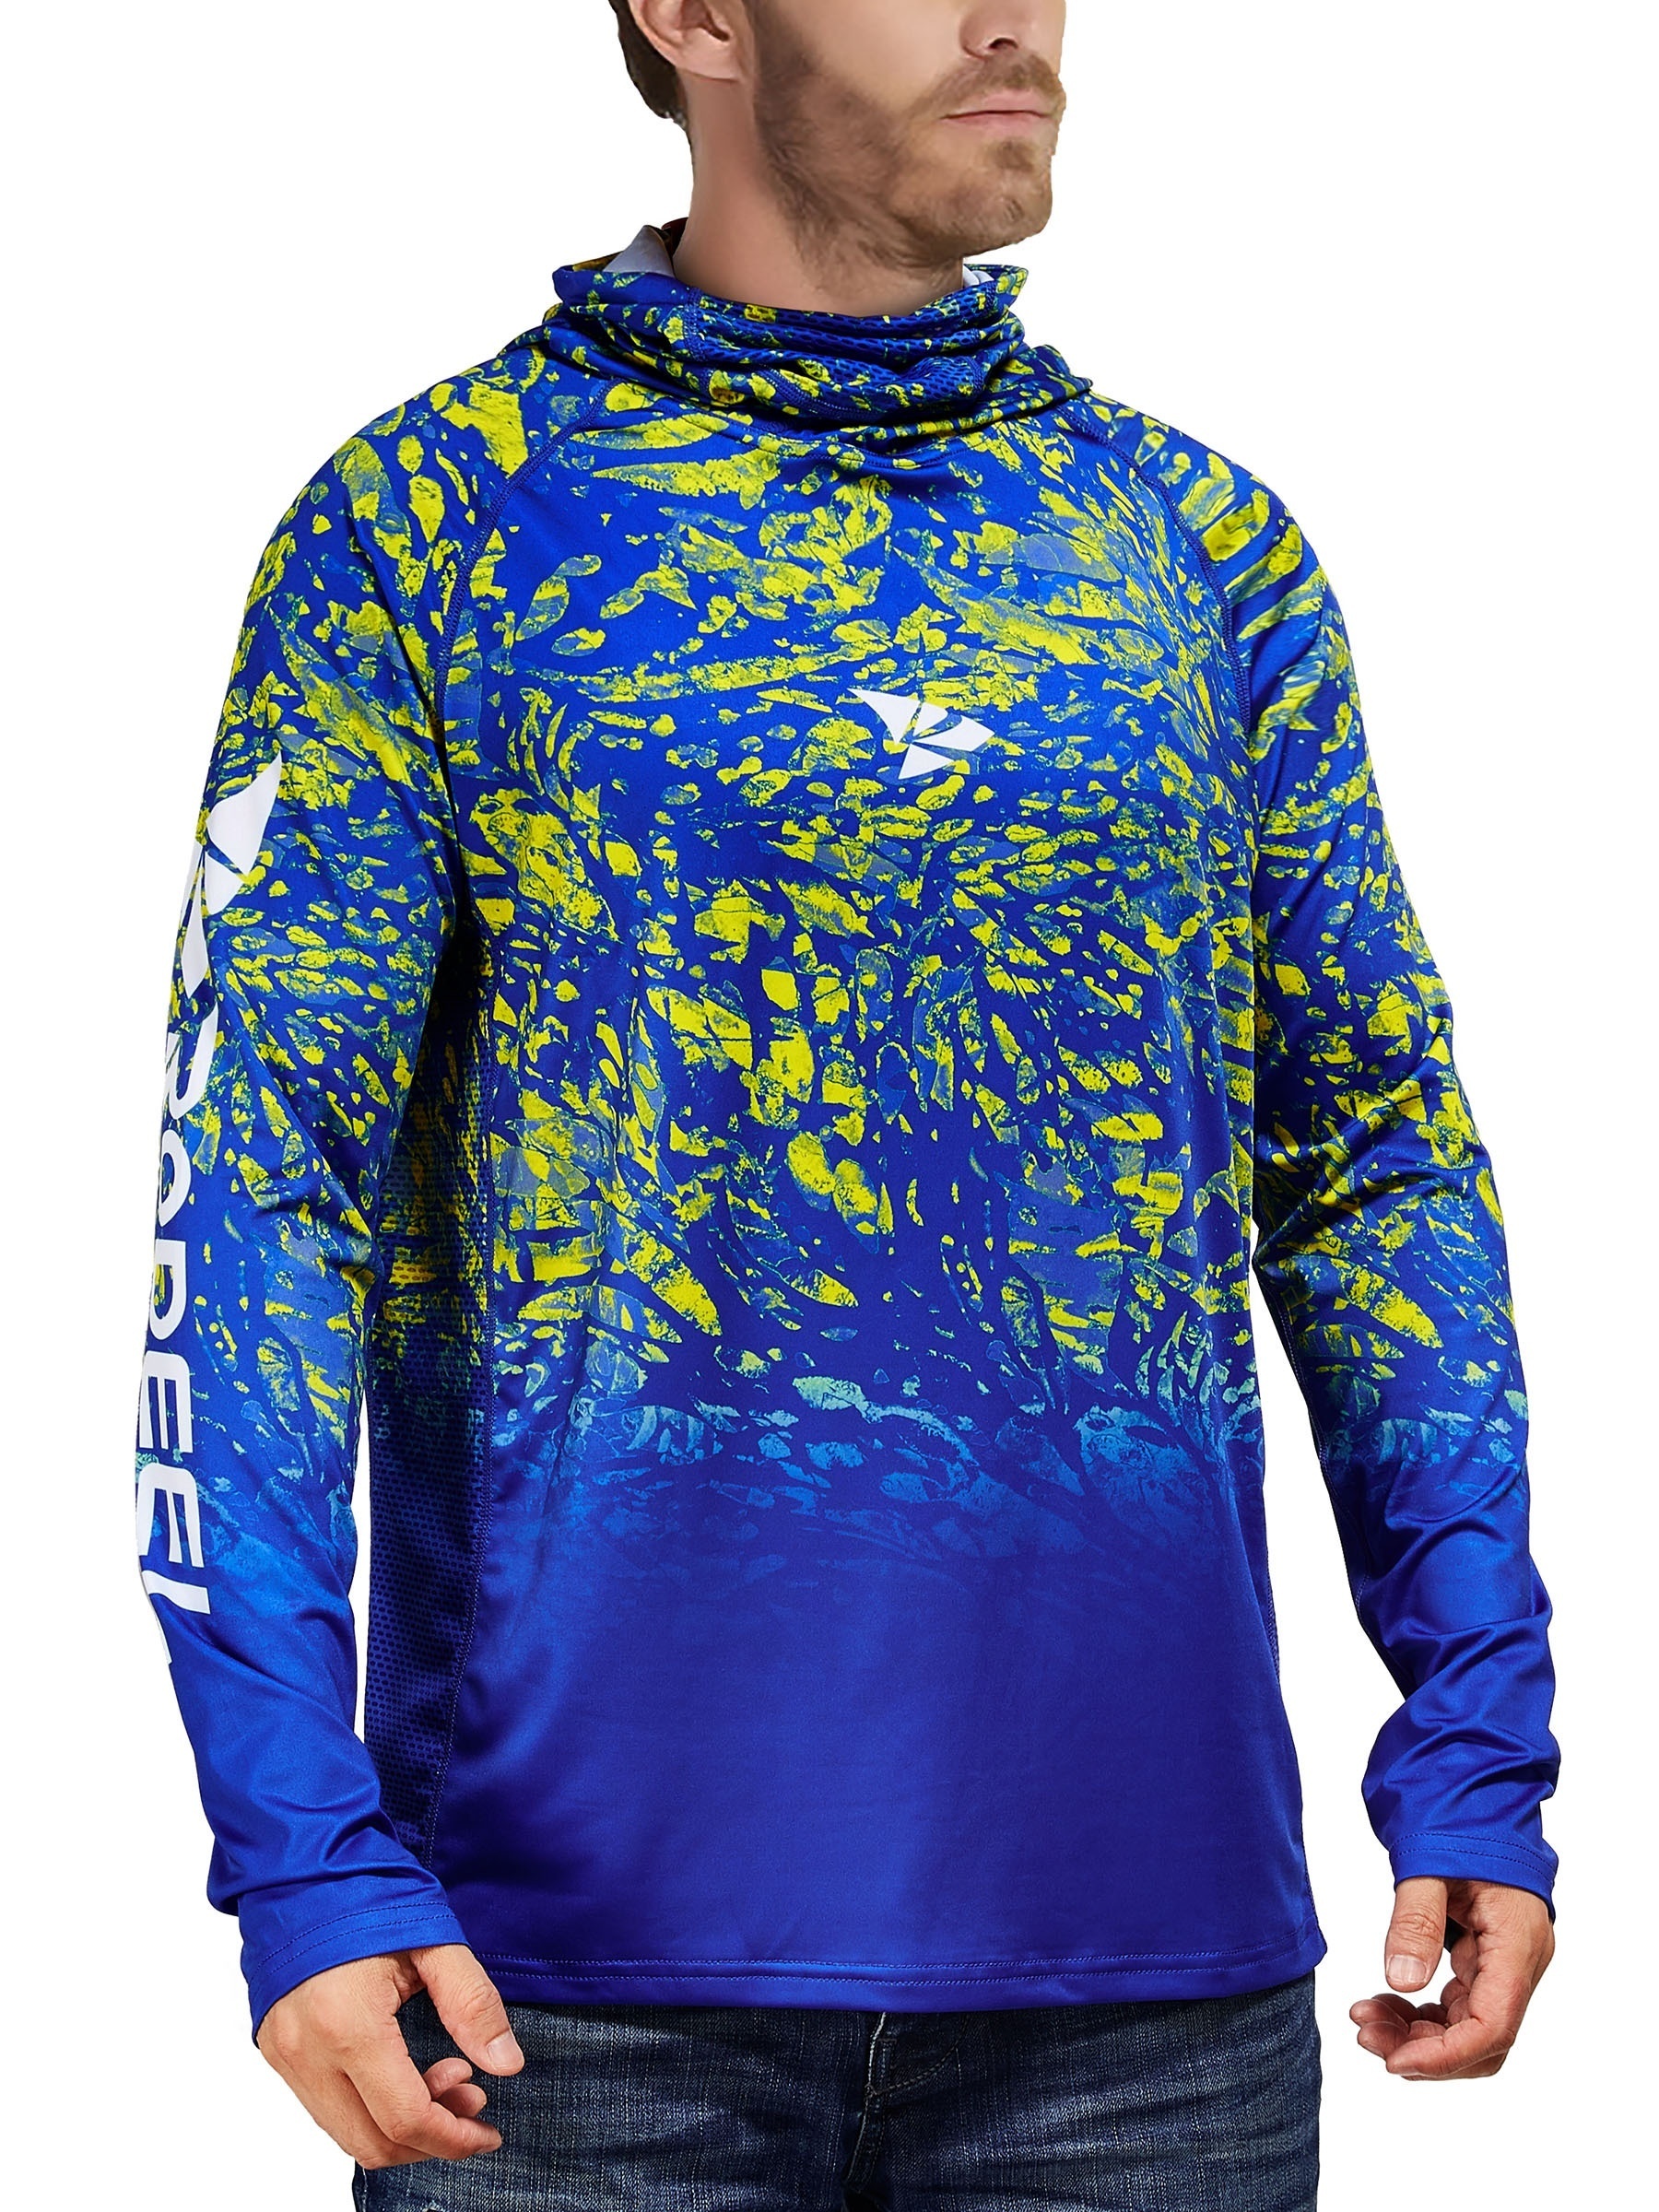 🎣🌊 Ultimate Fishing Gear: SPF50 Long Sleeve Fishing Shirt with